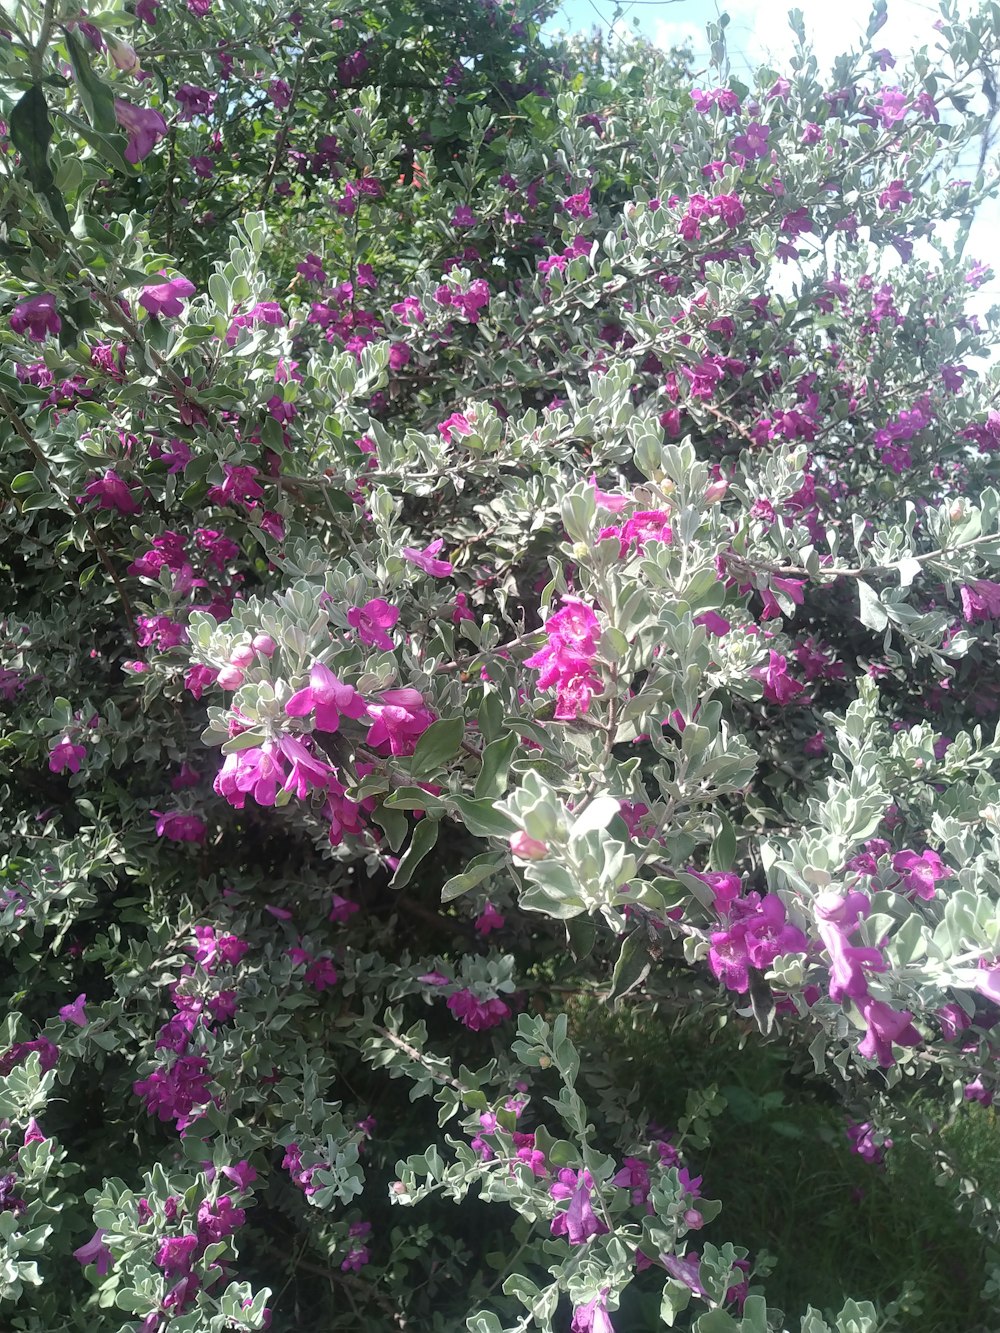 a bush with purple flowers